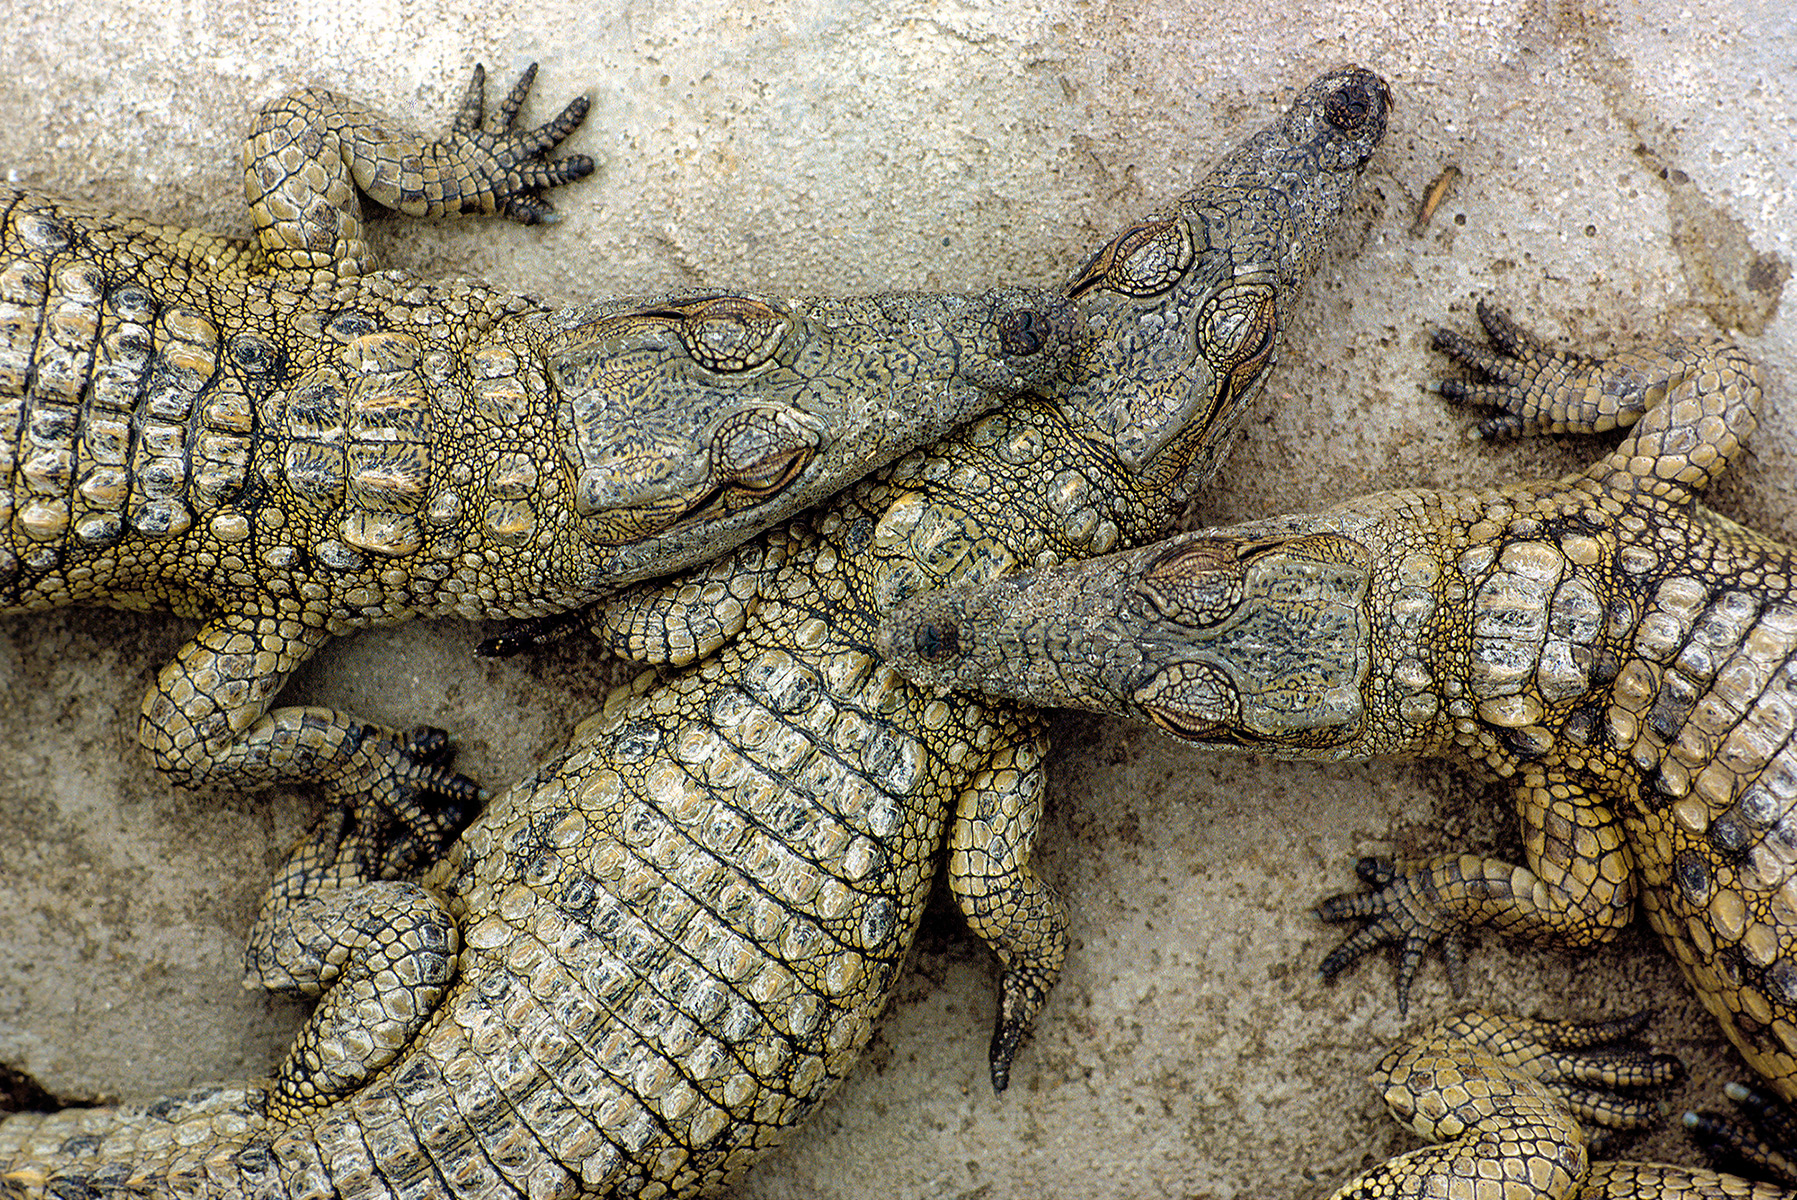 Nile Crocs, South Africa